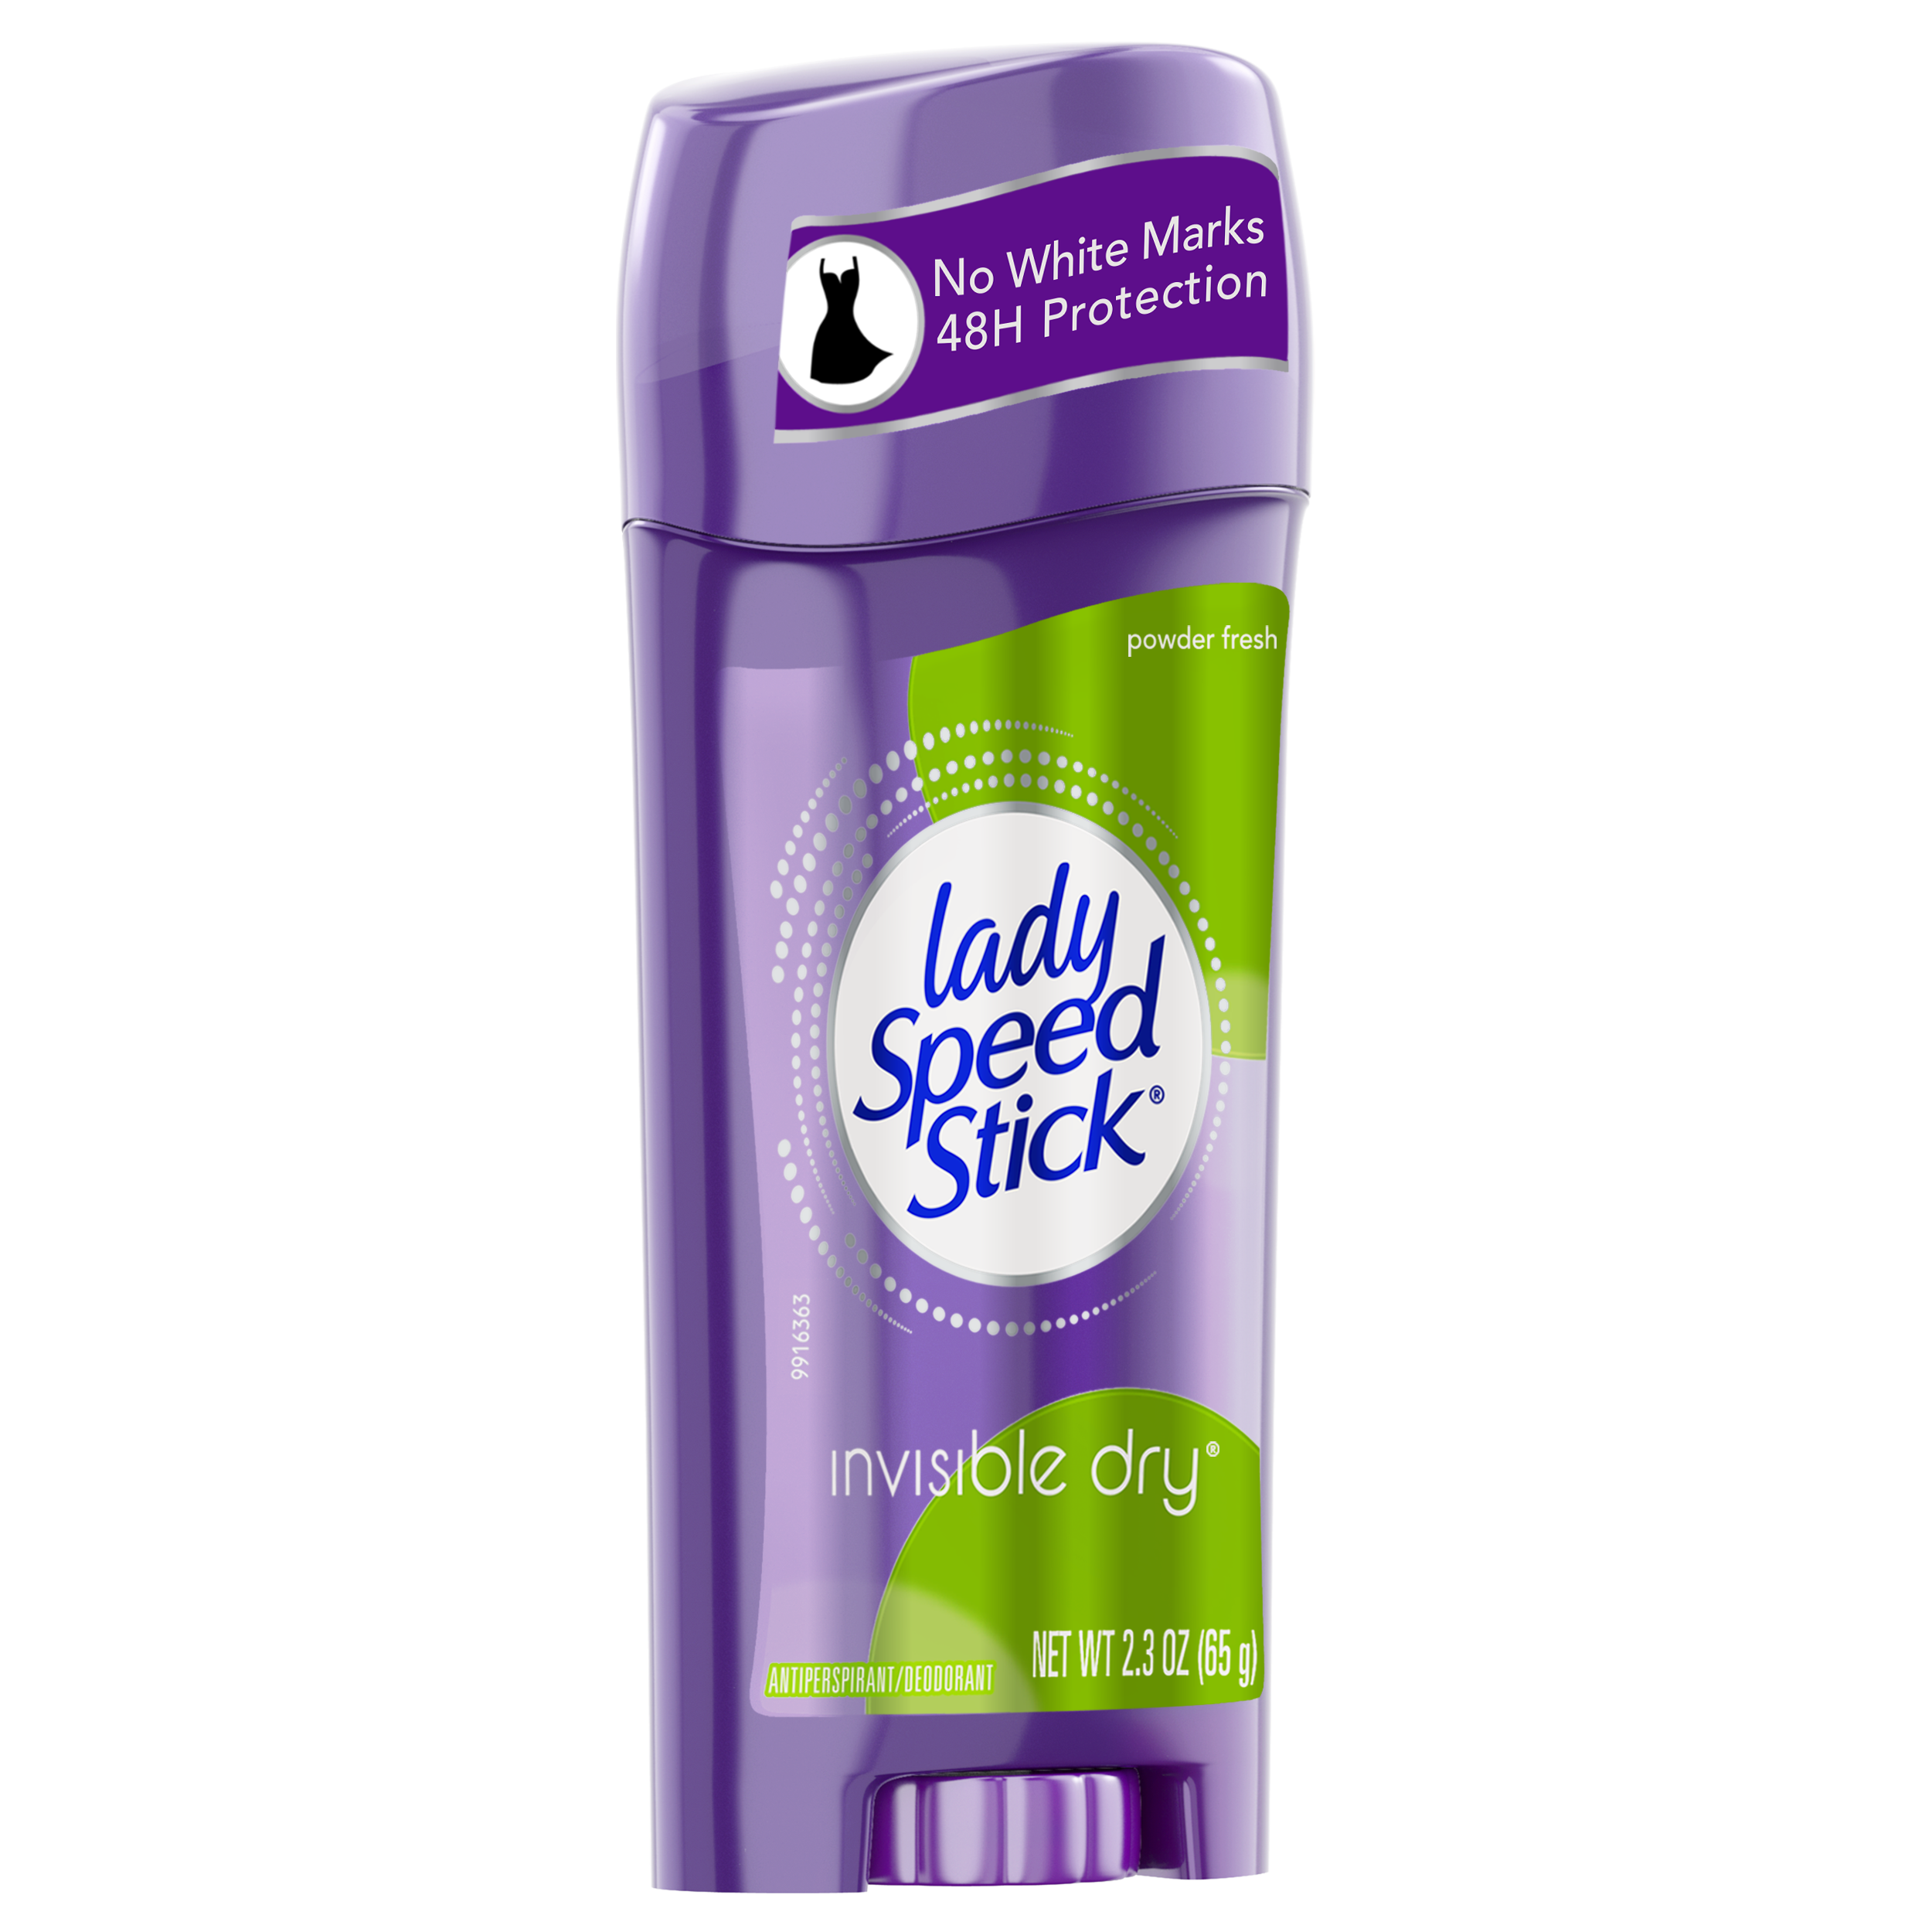 Lady Speed Stick Antiperspirant Deodorant Invisible Dry Powder Fresh, 2.30 oz - image 2 of 4